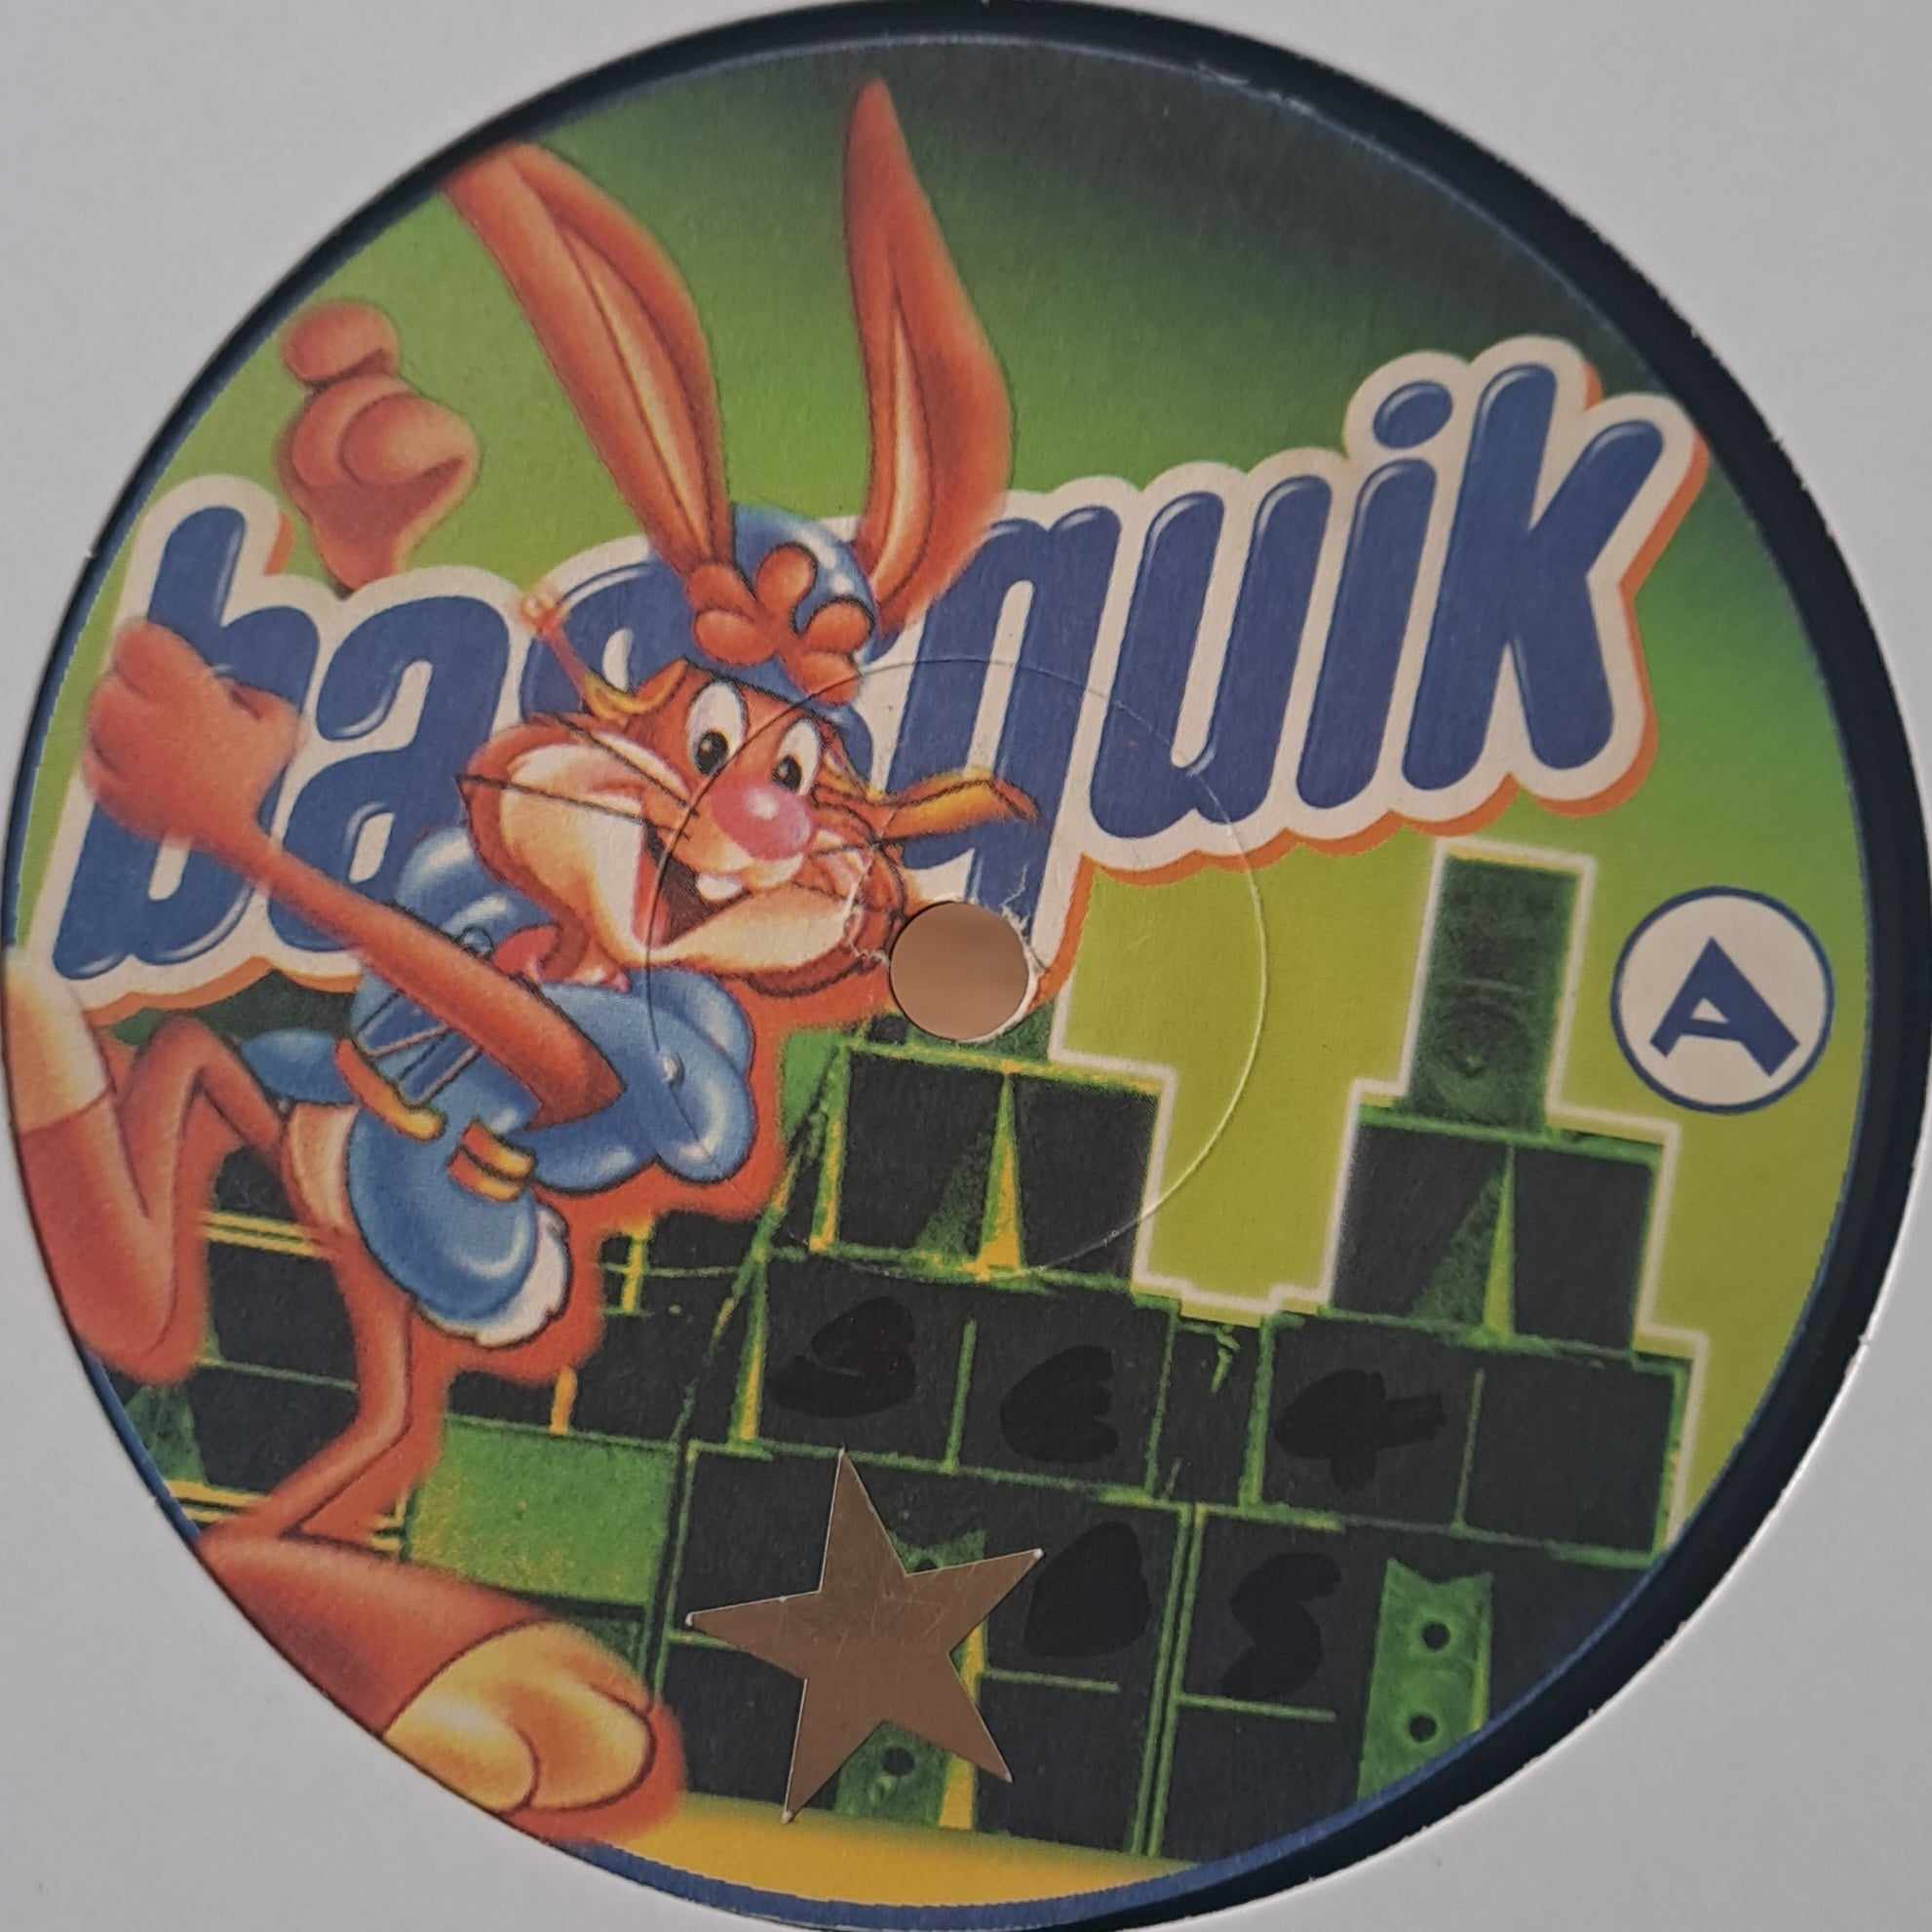 Bassquik 02 - vinyle freetekno